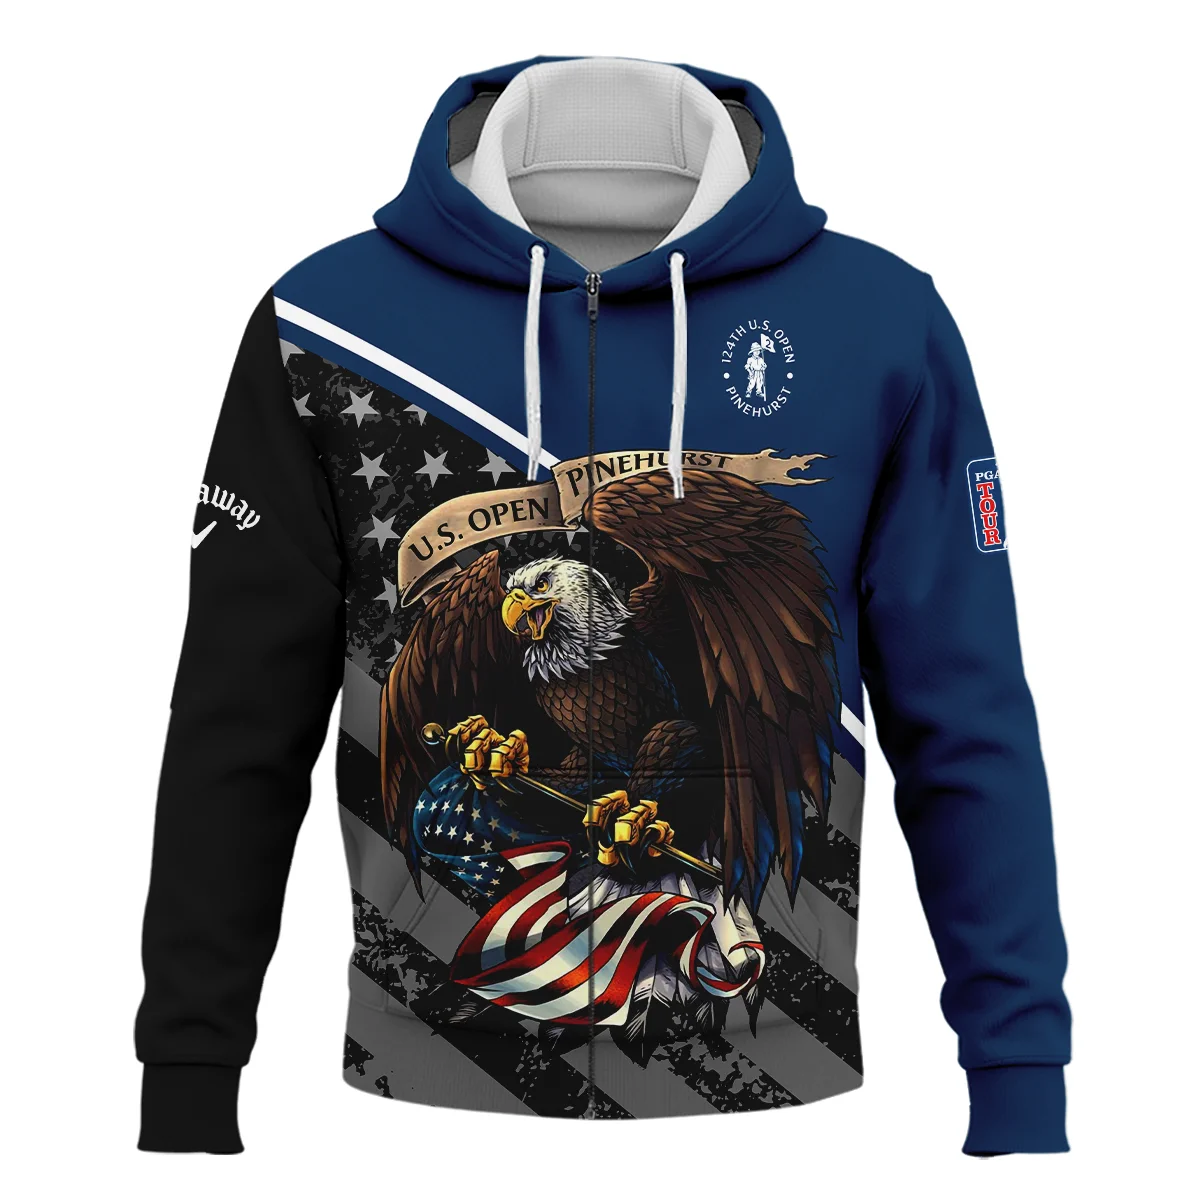 Special Version 124th U.S. Open Pinehurst Callaway Unisex Sweatshirt Color Blue Eagle USA  Sweatshirt